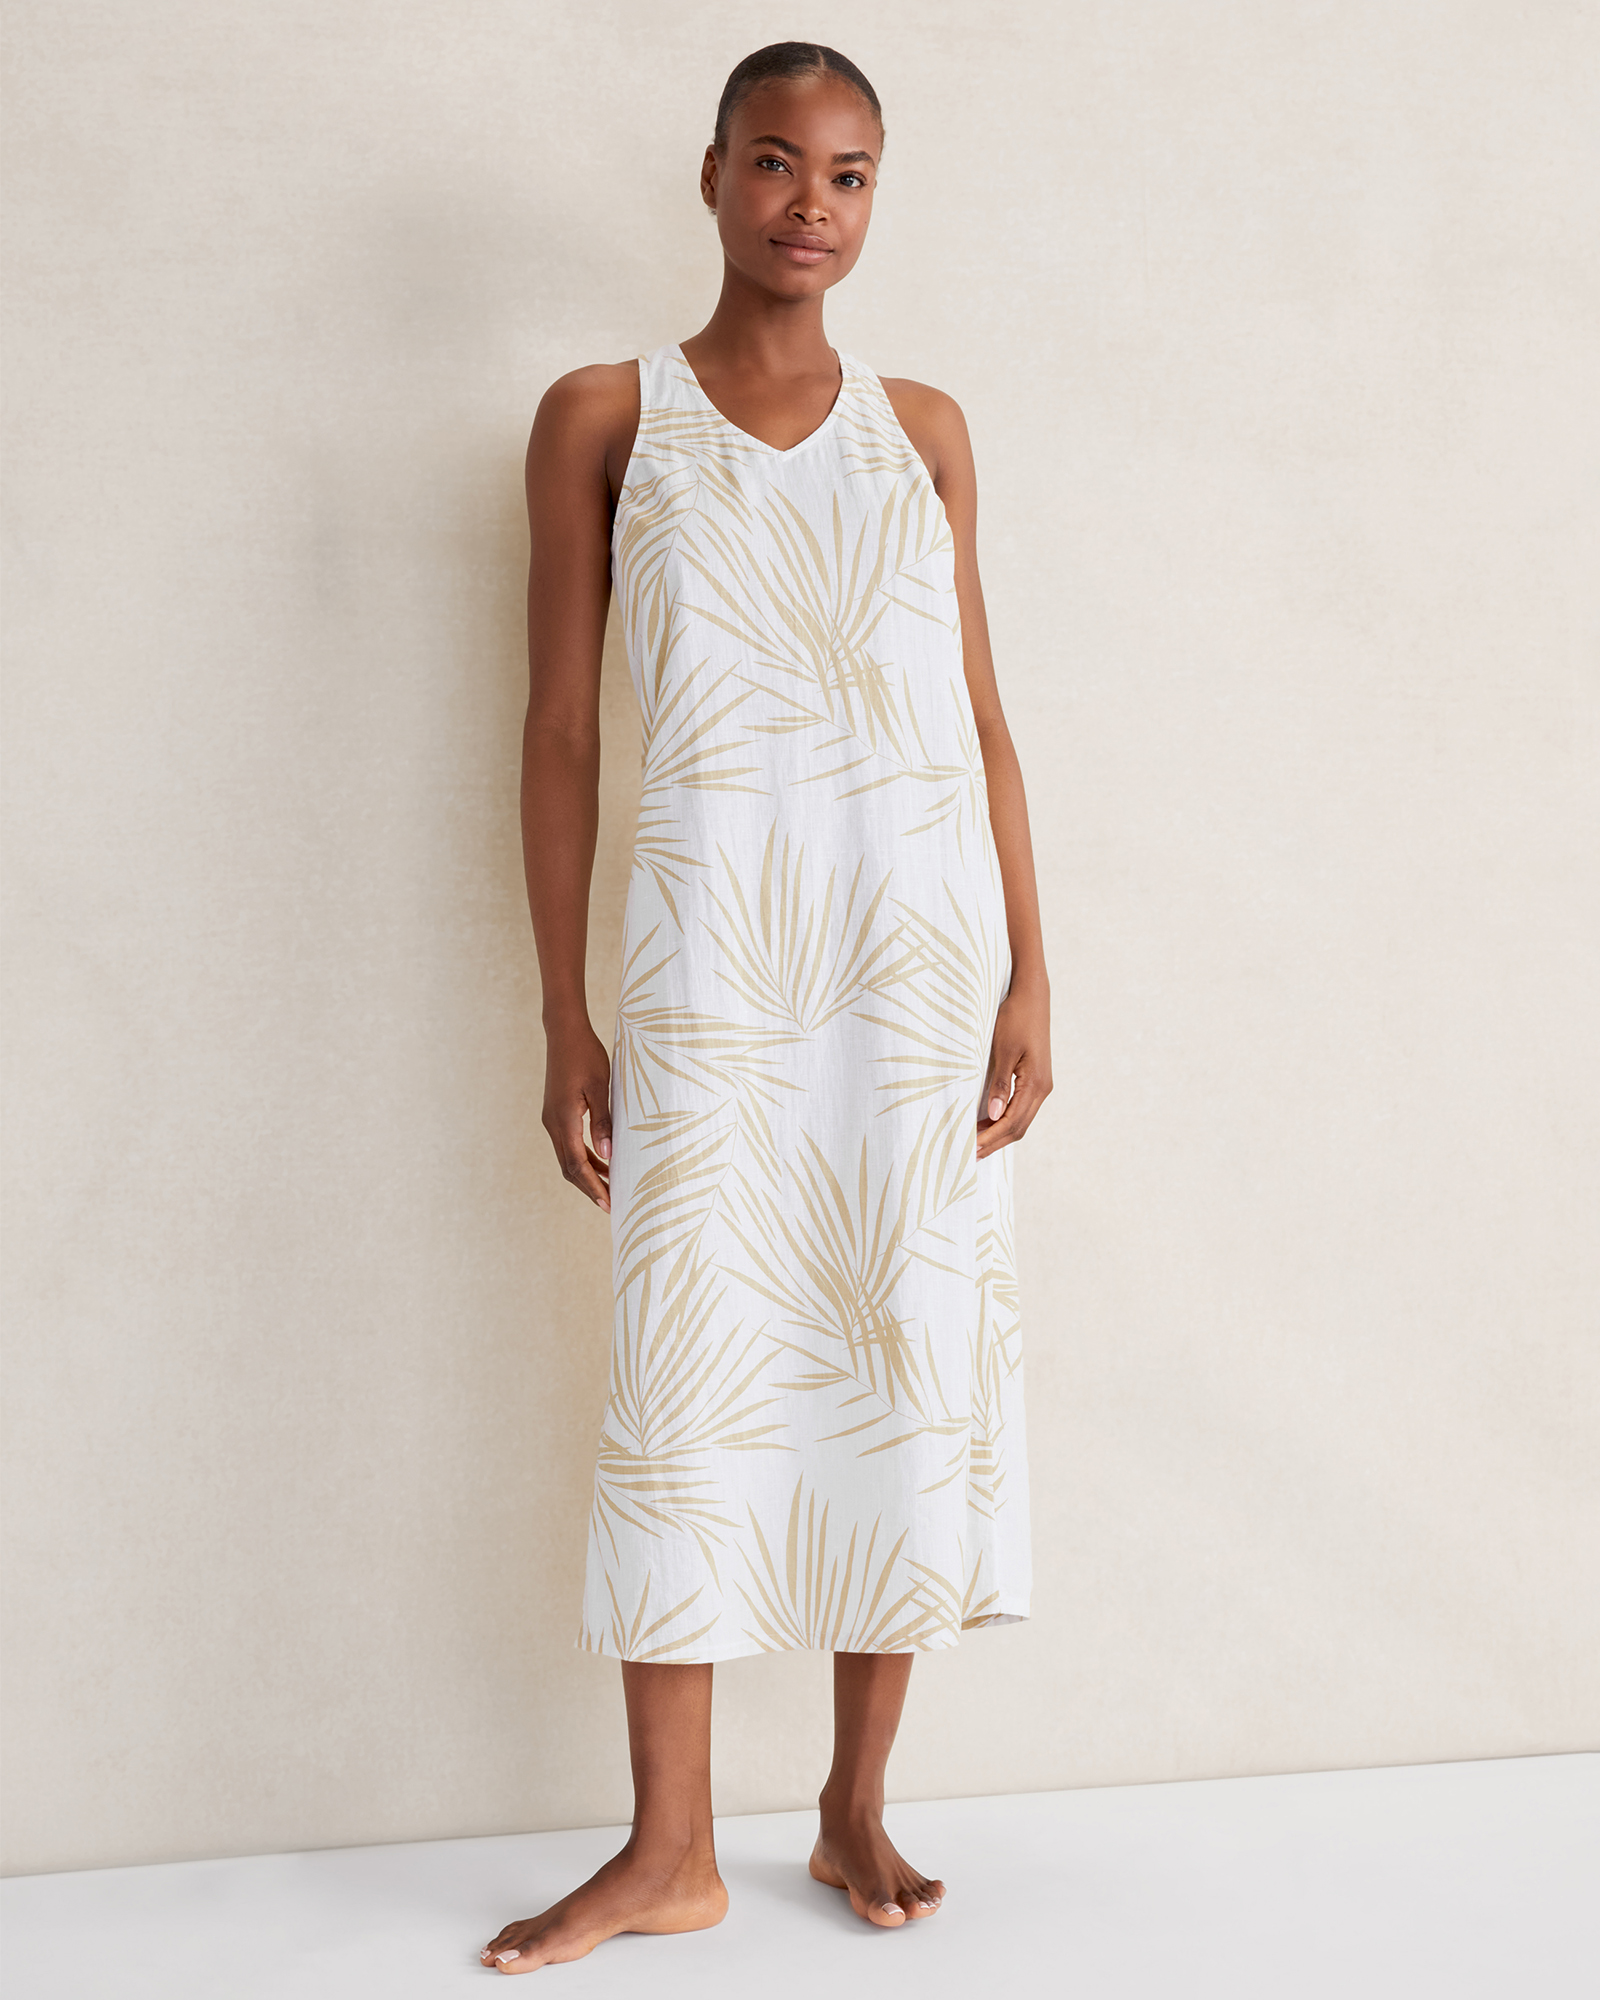 Talbots Organic Cotton Linen Palm Print Dress - White/sepia - Xxl